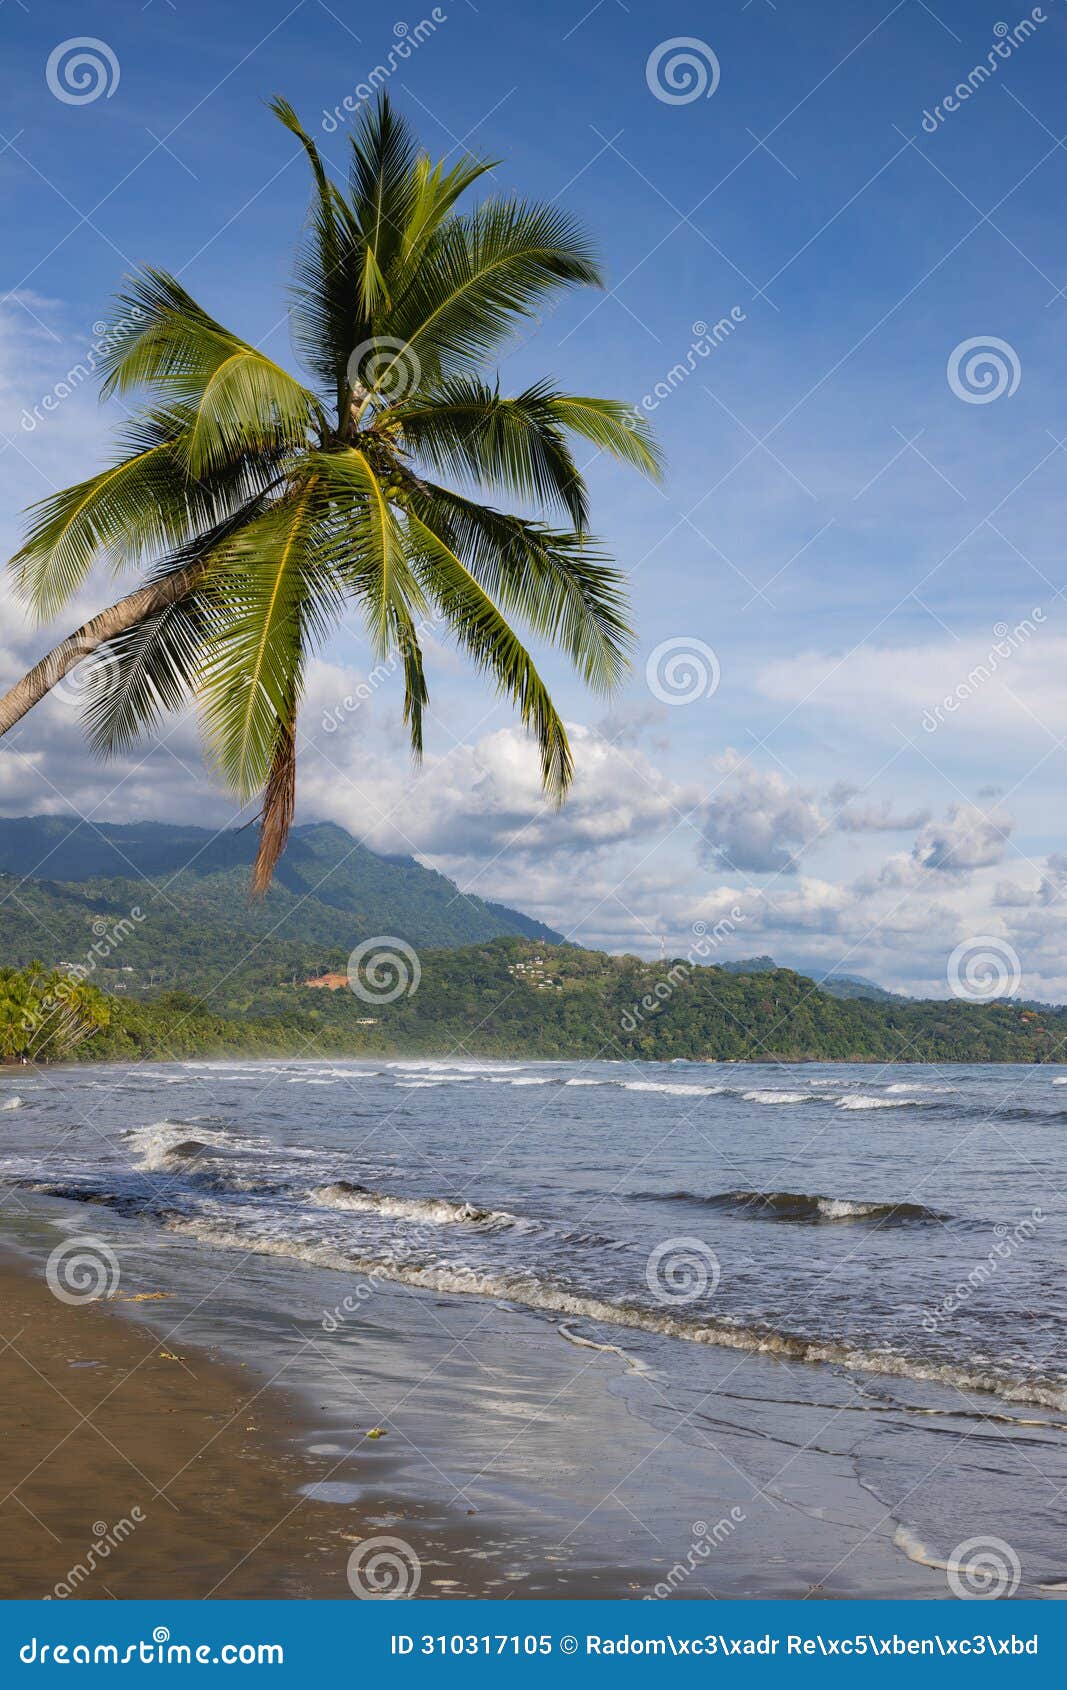 bahia ballena beach, popular beautiful beache at pacific coast